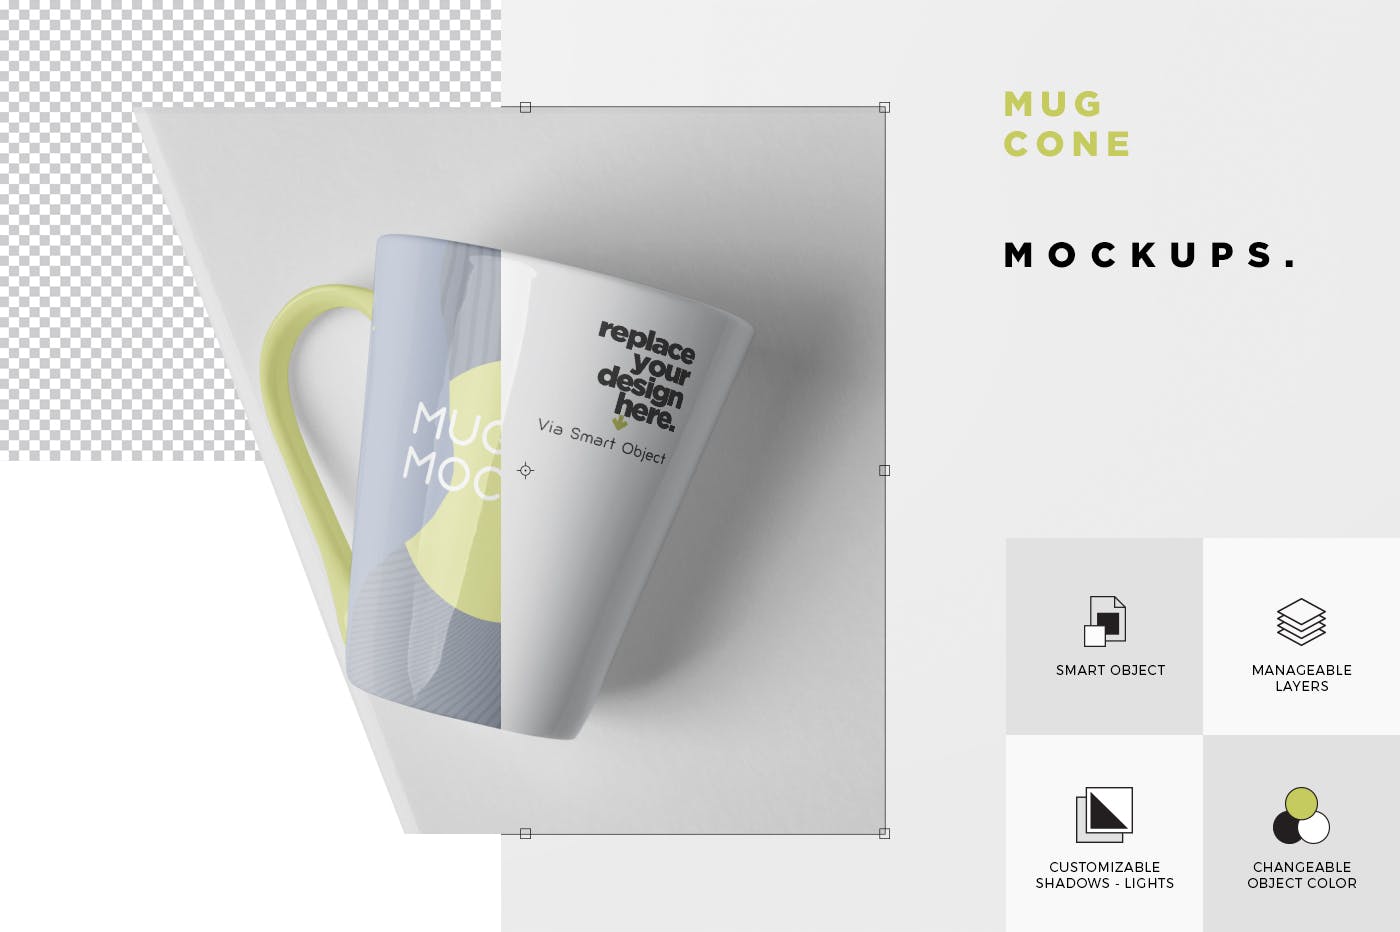 锥形马克杯图案设计第一素材精选 Mug Mockup – Cone Shaped插图(5)